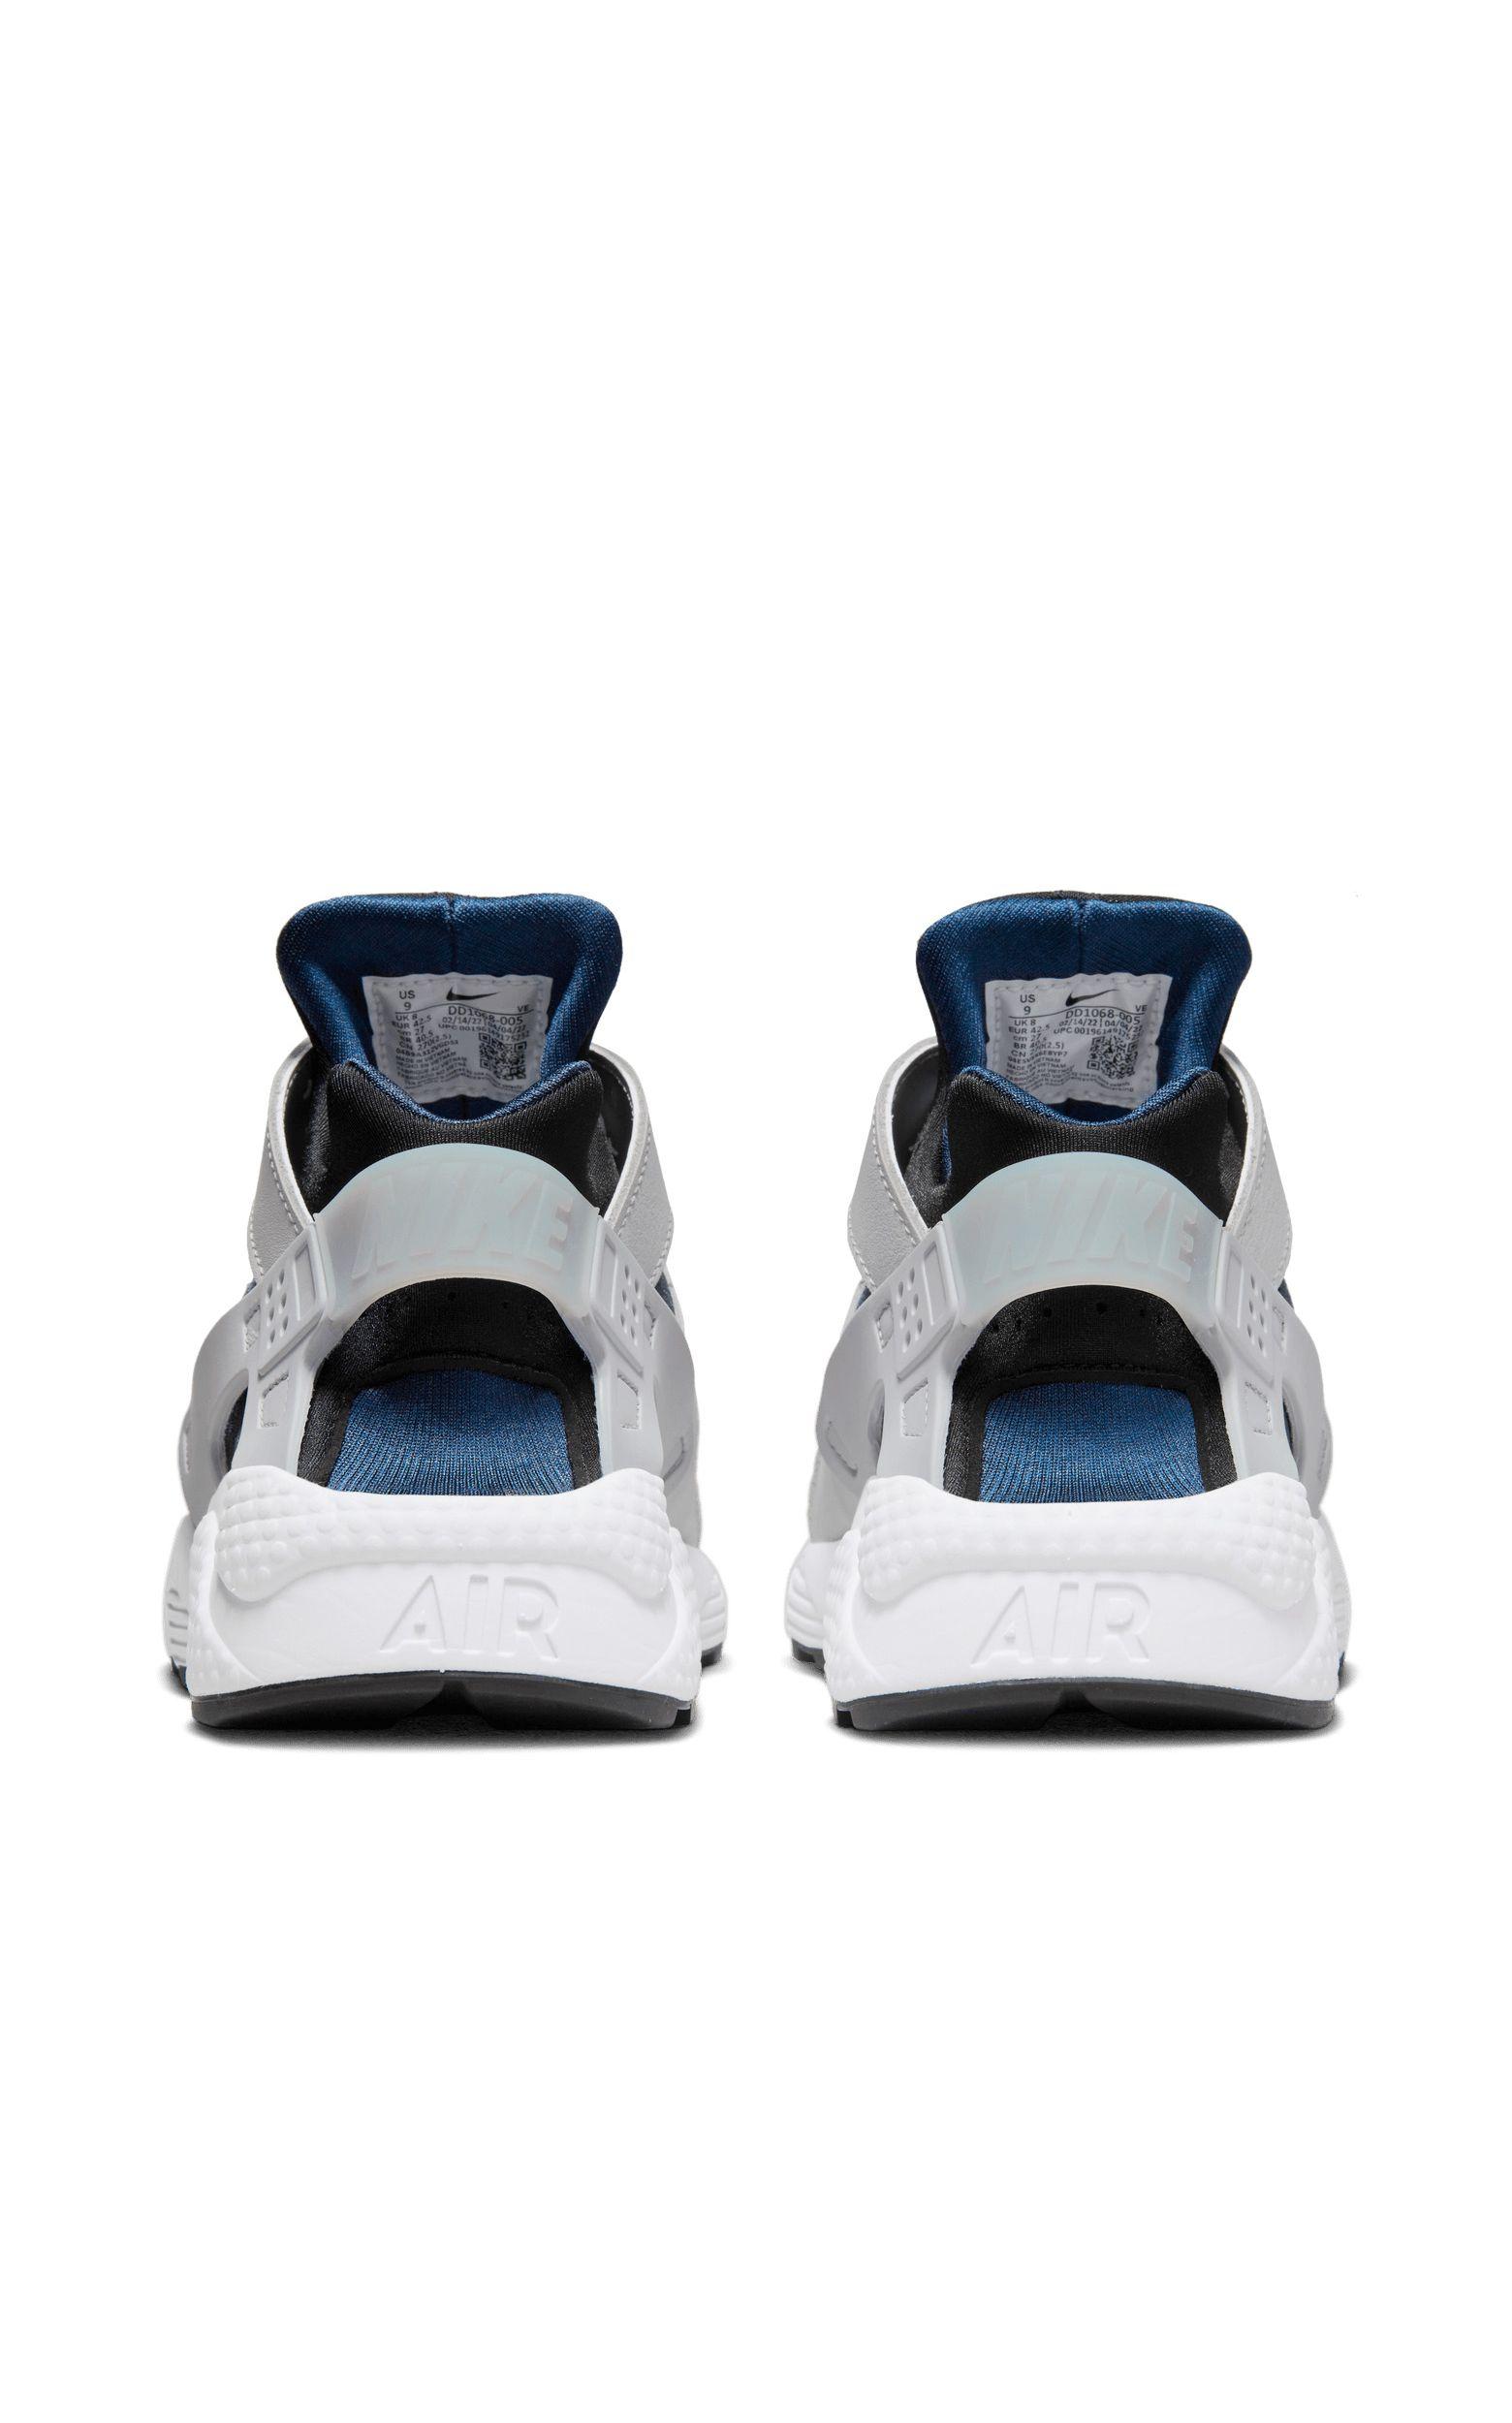 Nike Air Huarache Womens Mens Trainers Shoes Size UK 5,5.5,6,6.5